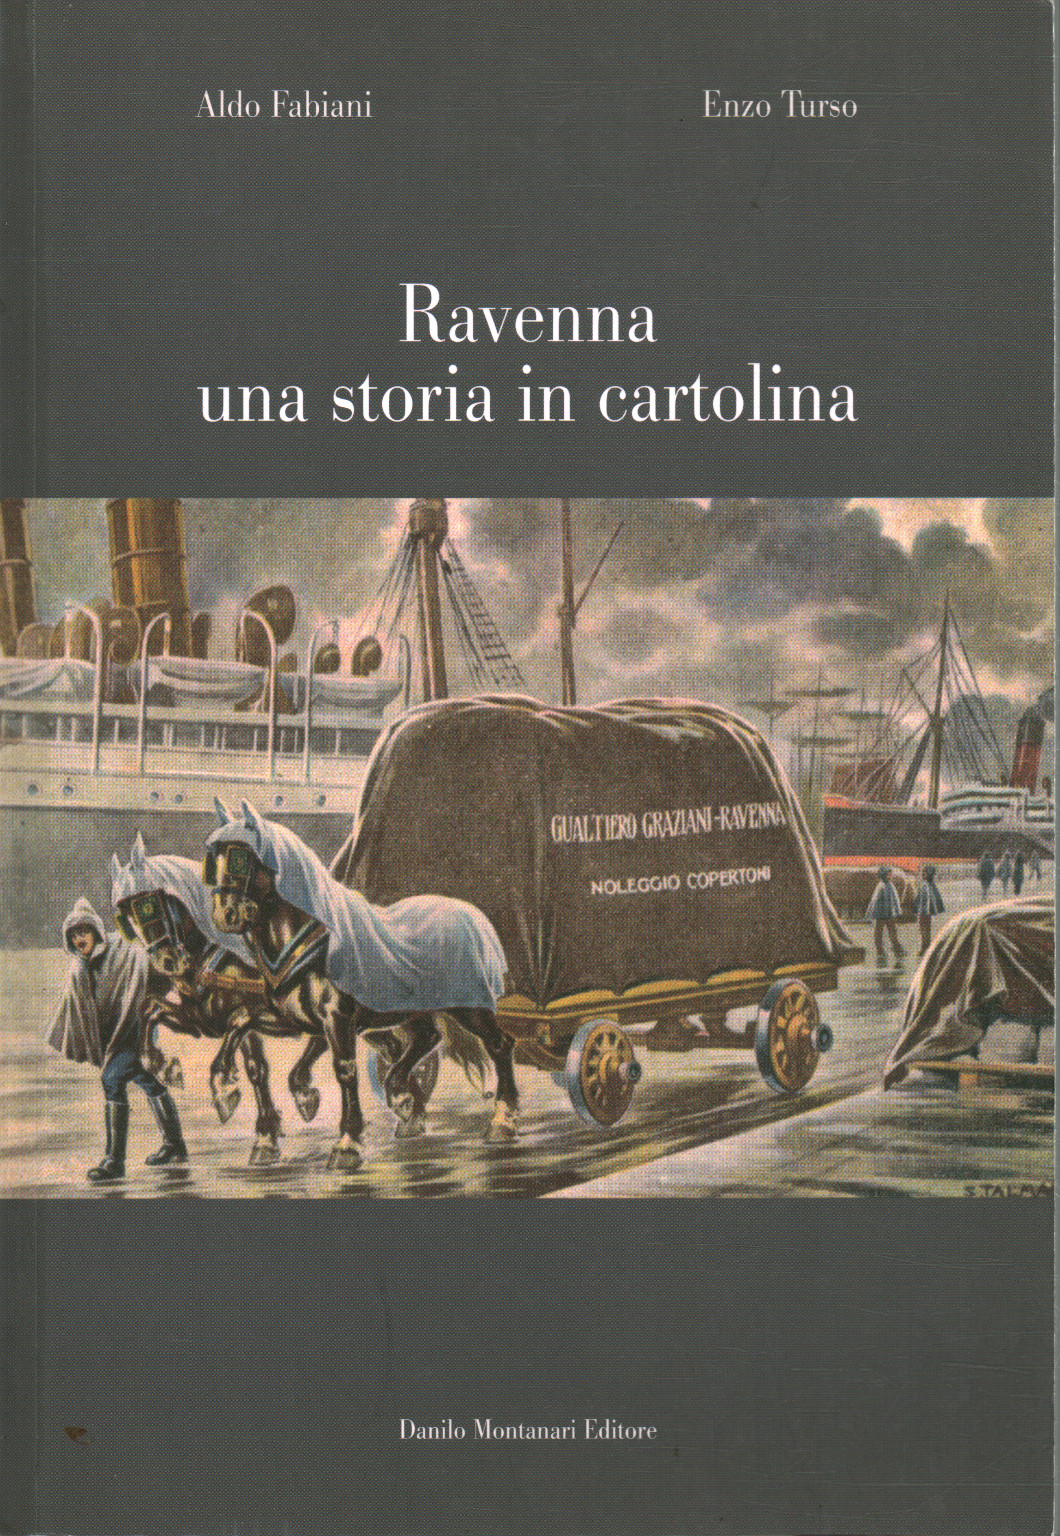 Ravenna a story in postcard, Aldo Fabiani Enzo Turso